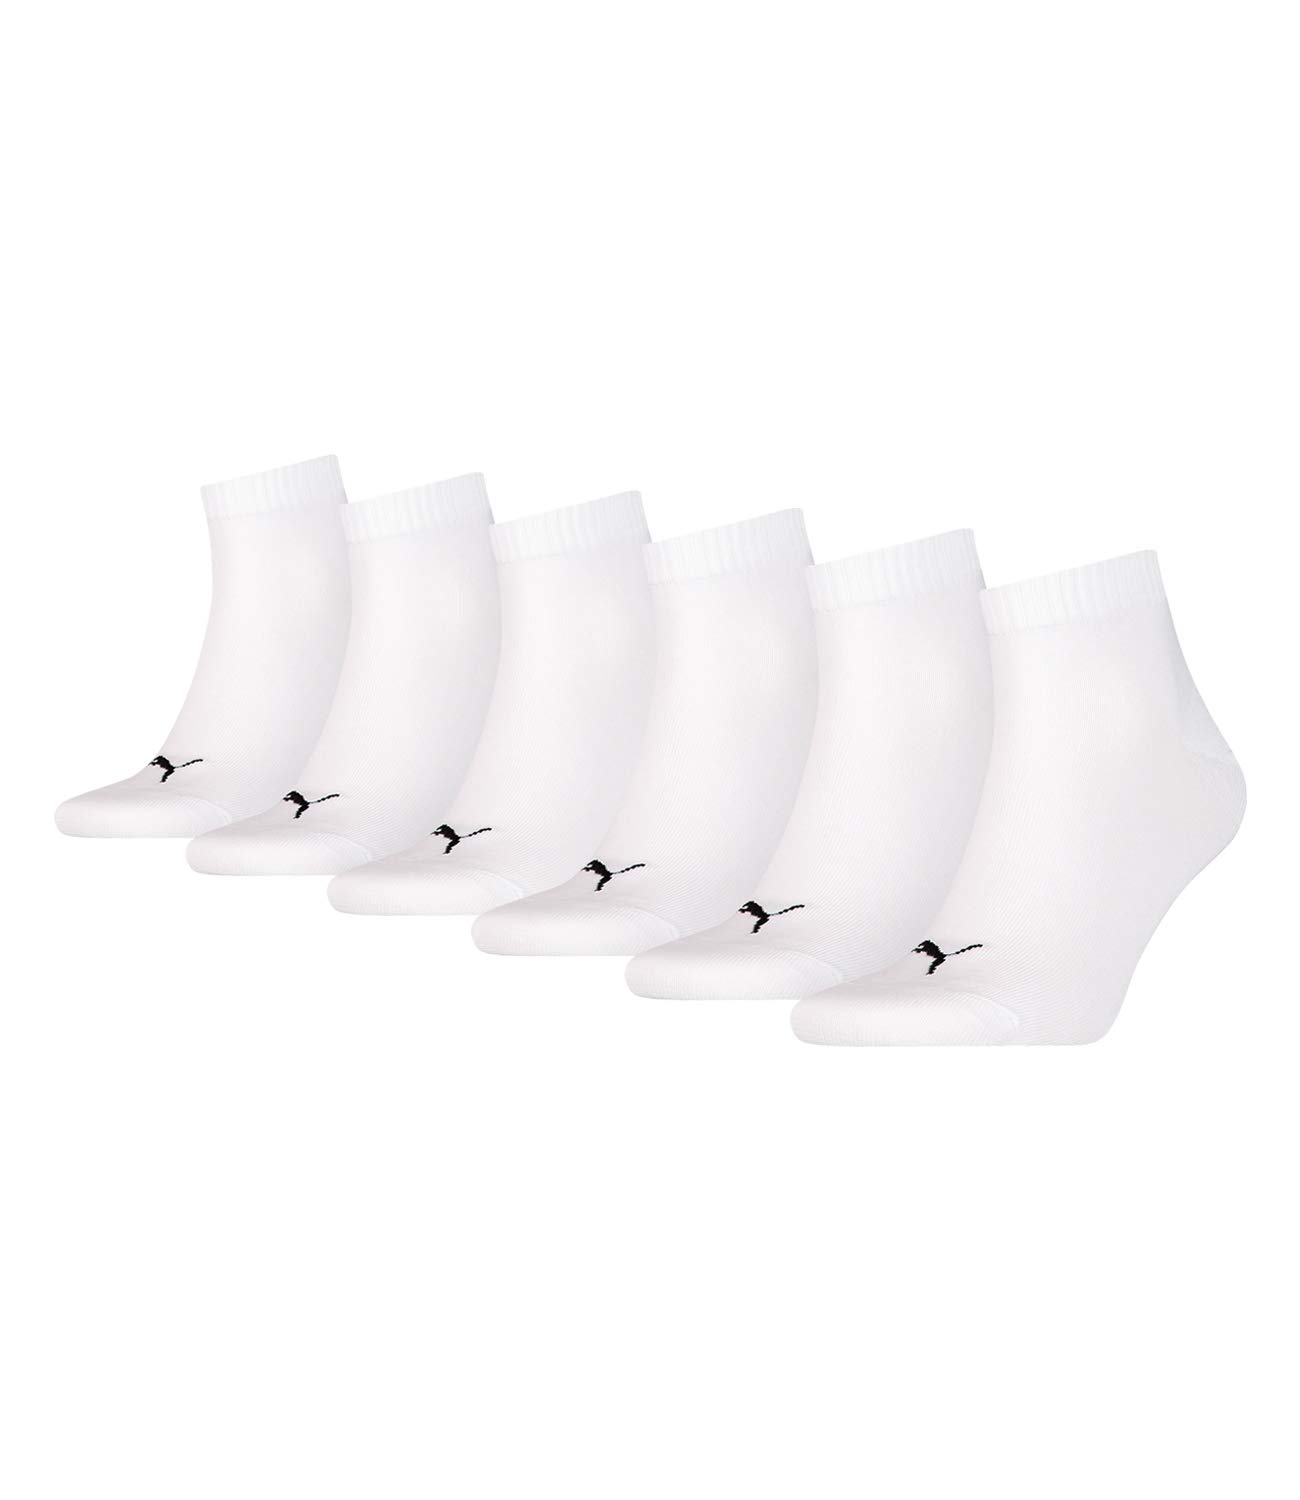 PUMA unisex Quarter Sportsocken Kurzsocken Socken 271080001 6 Paar, Farbe:Weiß, Menge:6 Paar (2x 3er Pack), Größe:35-38, Artikel:271080001-300 white